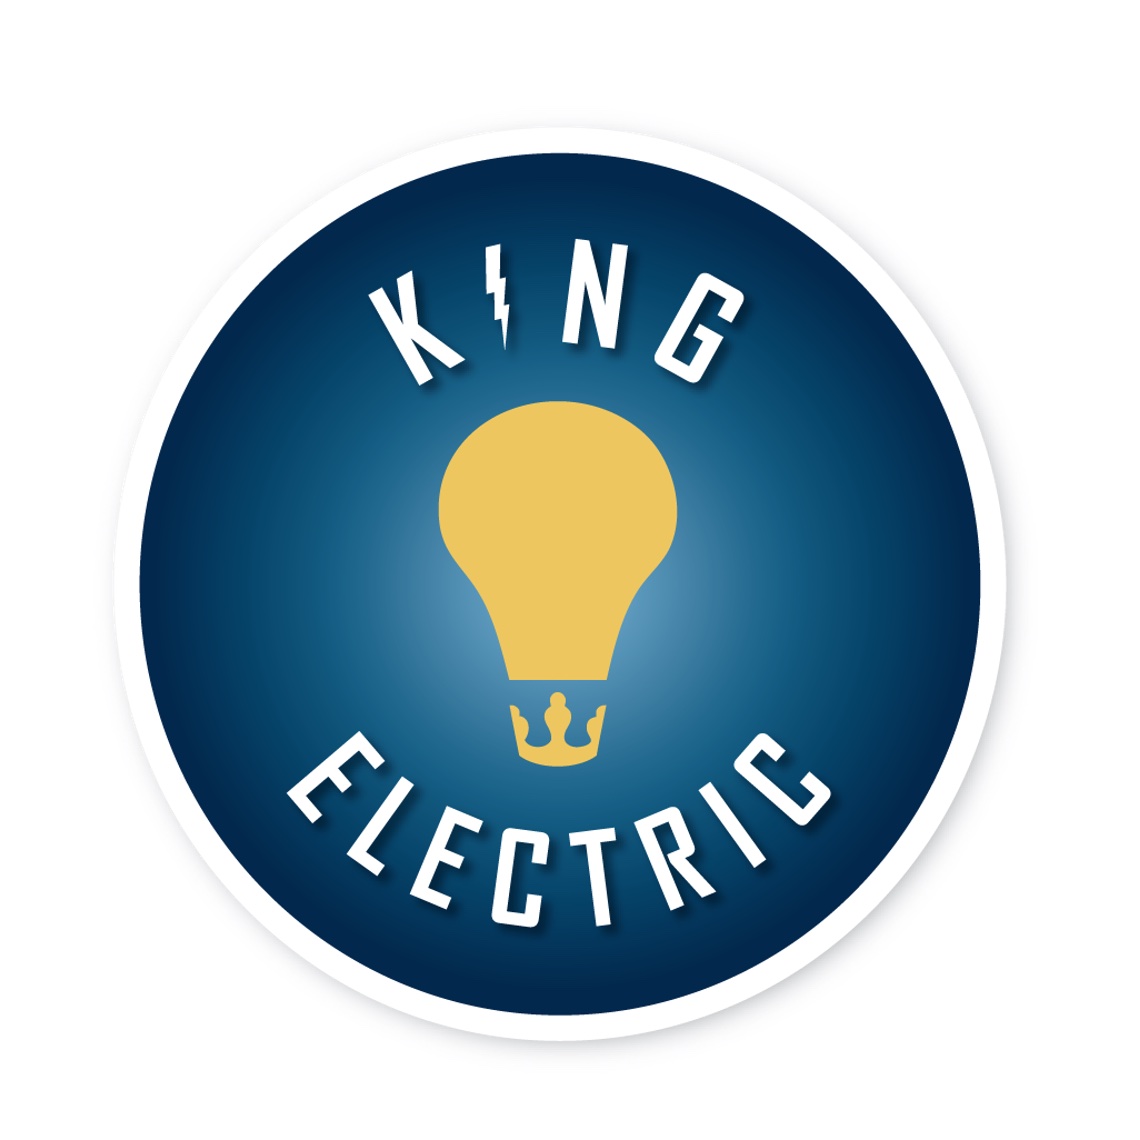 King Electric